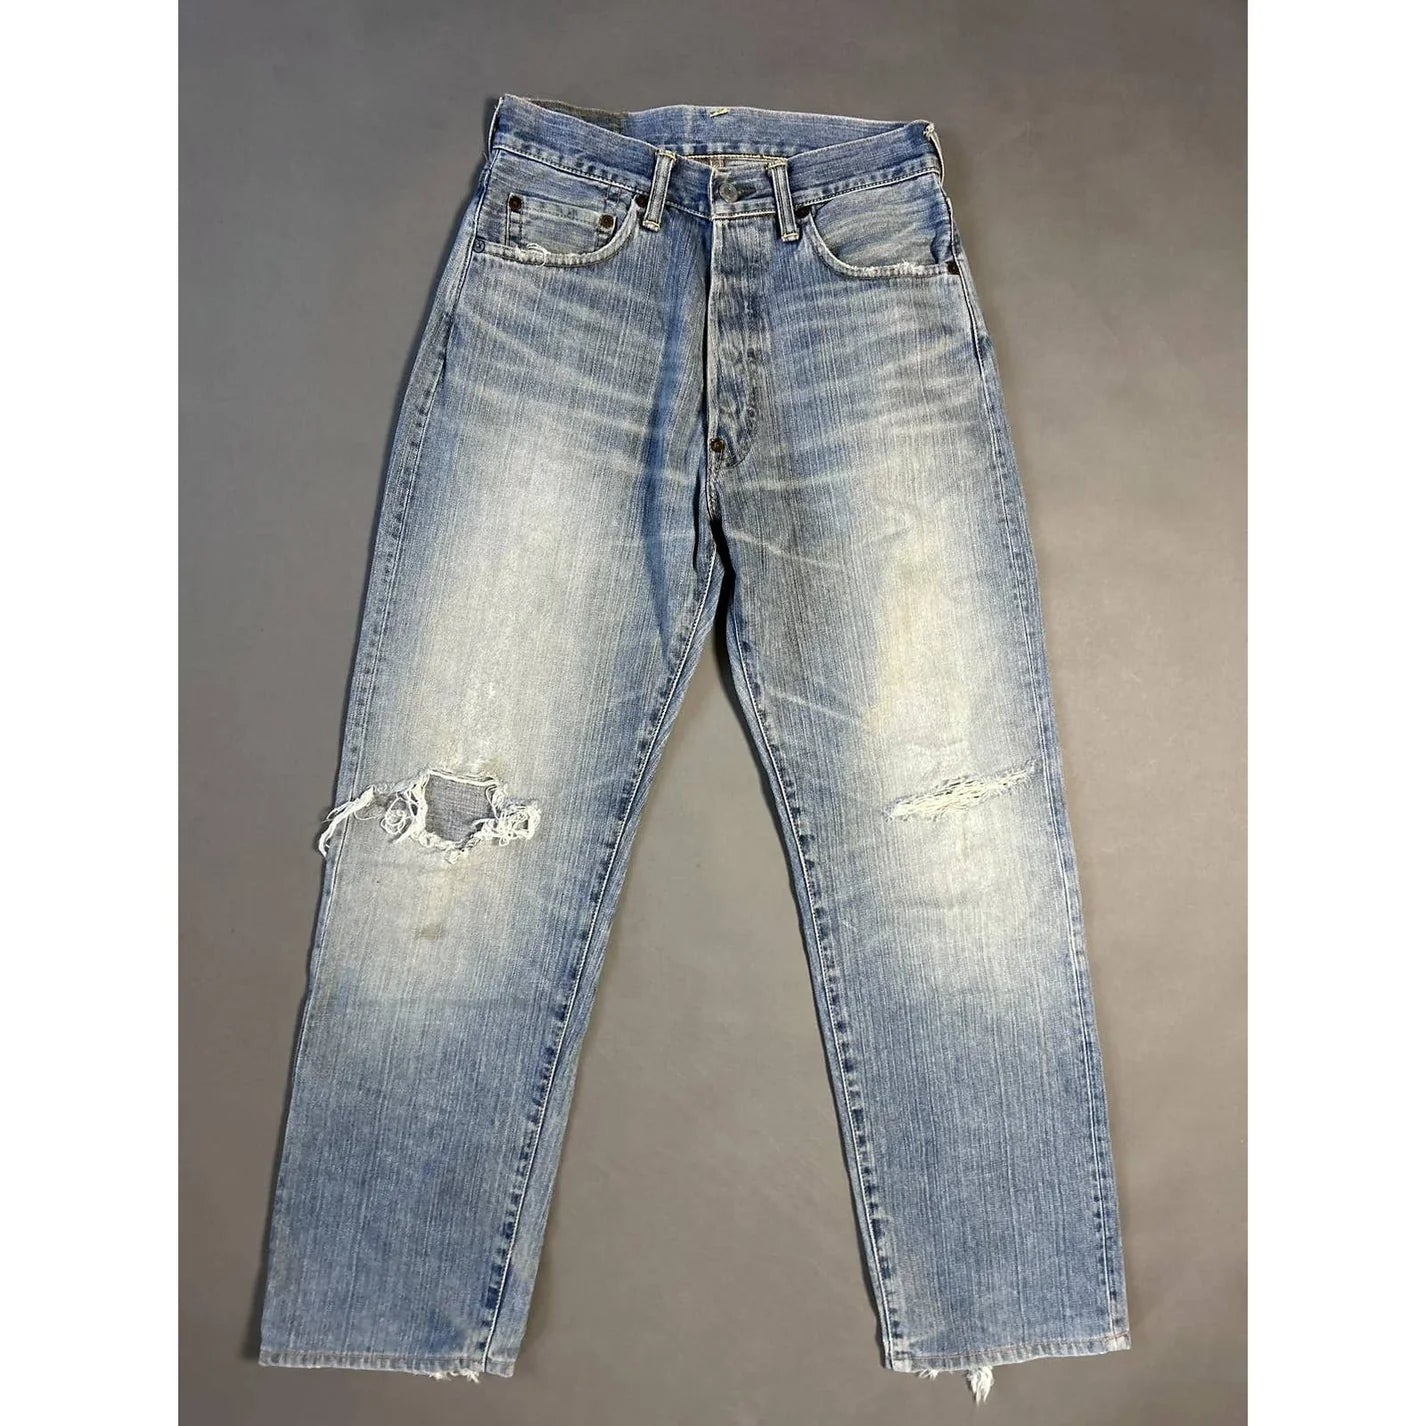 Evisu Jeans Vintage Japanese Denim Pants Seagulls Baby Blue Lodz Polska front